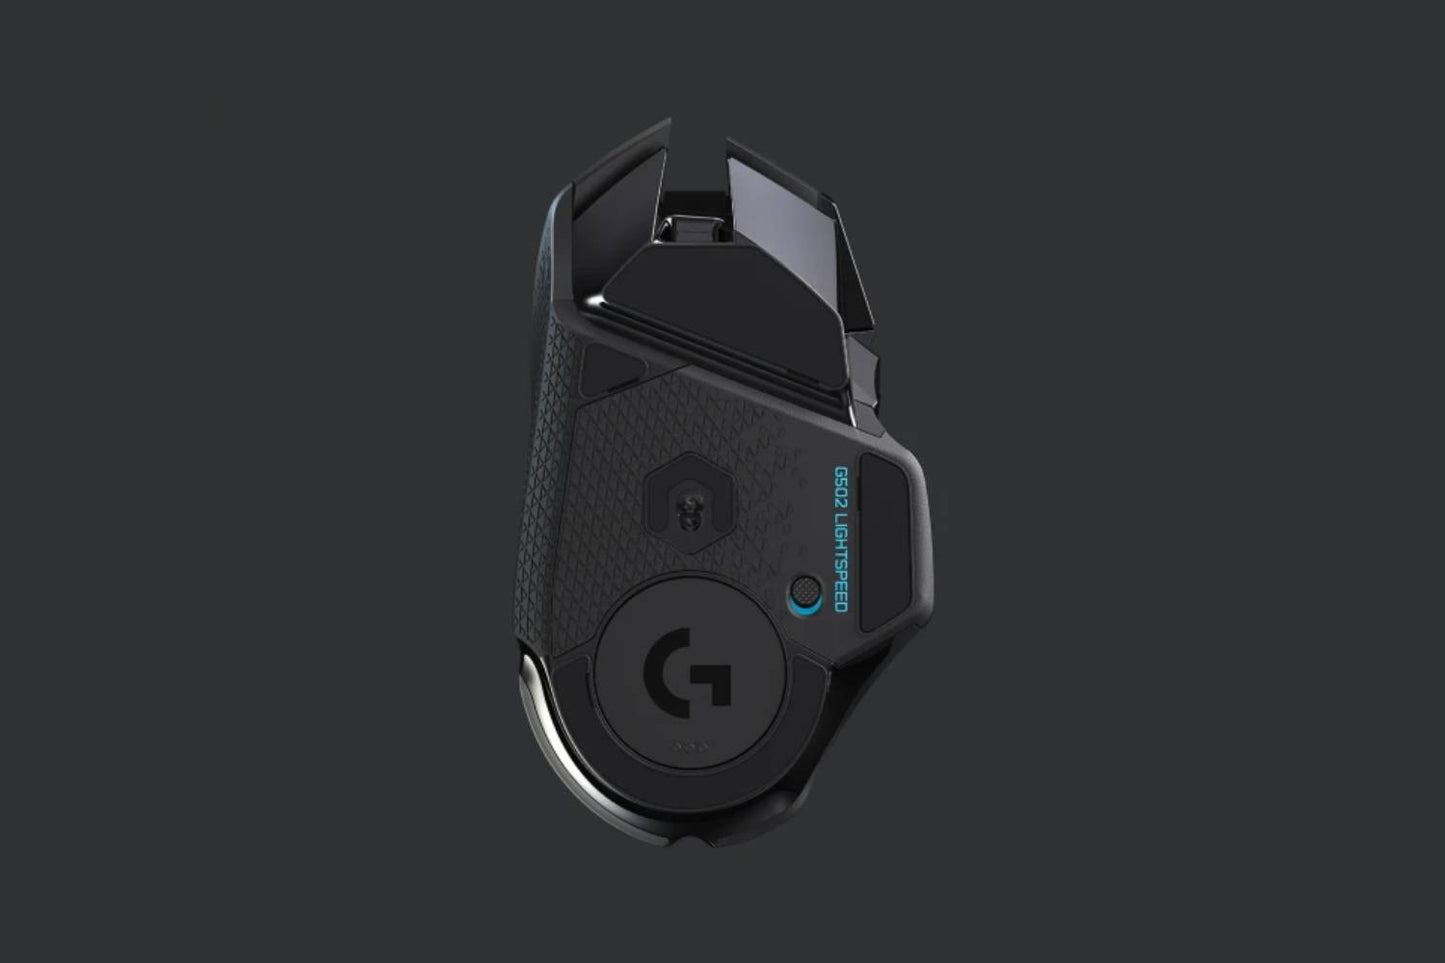 Logitech G502 hero high performance gaming mouse